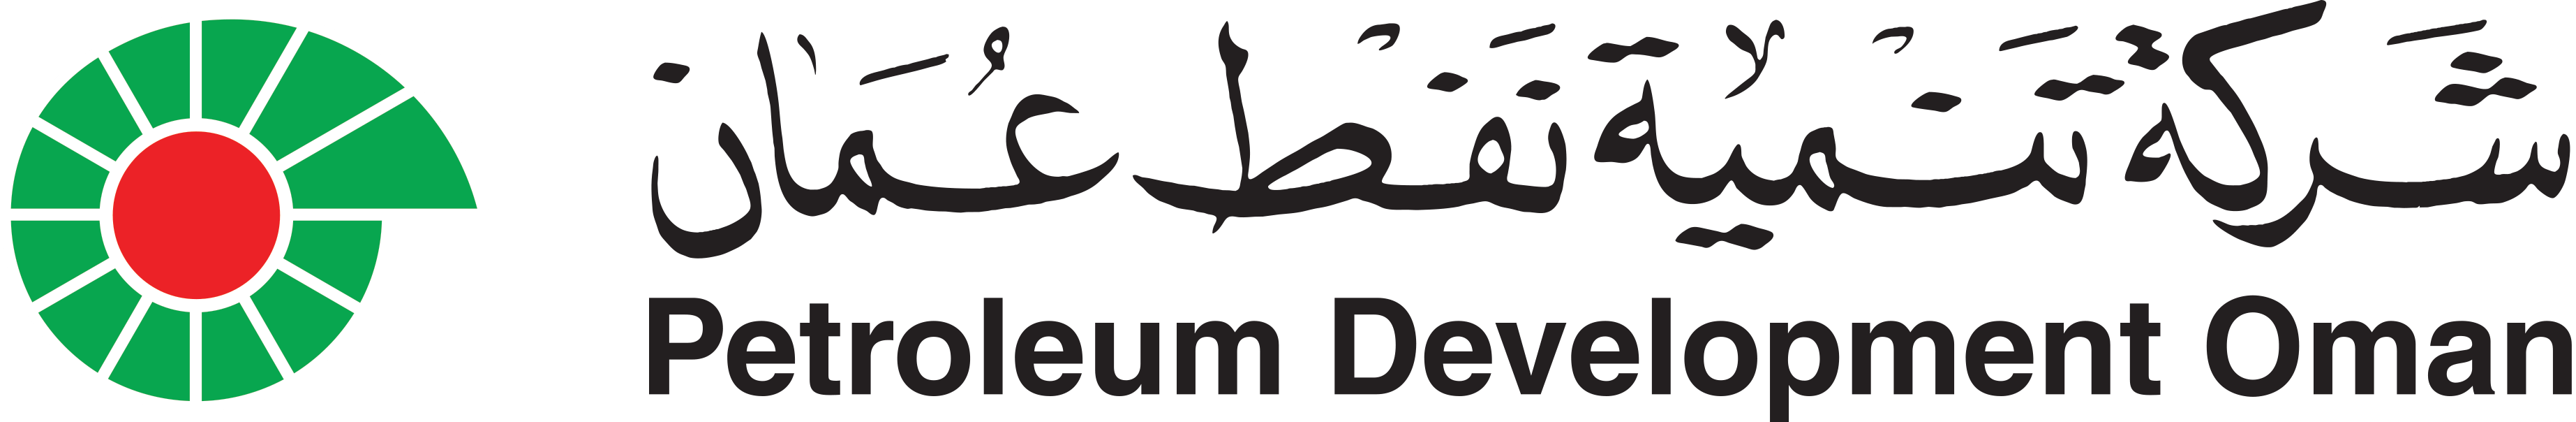 petroleum-development-oman-logo